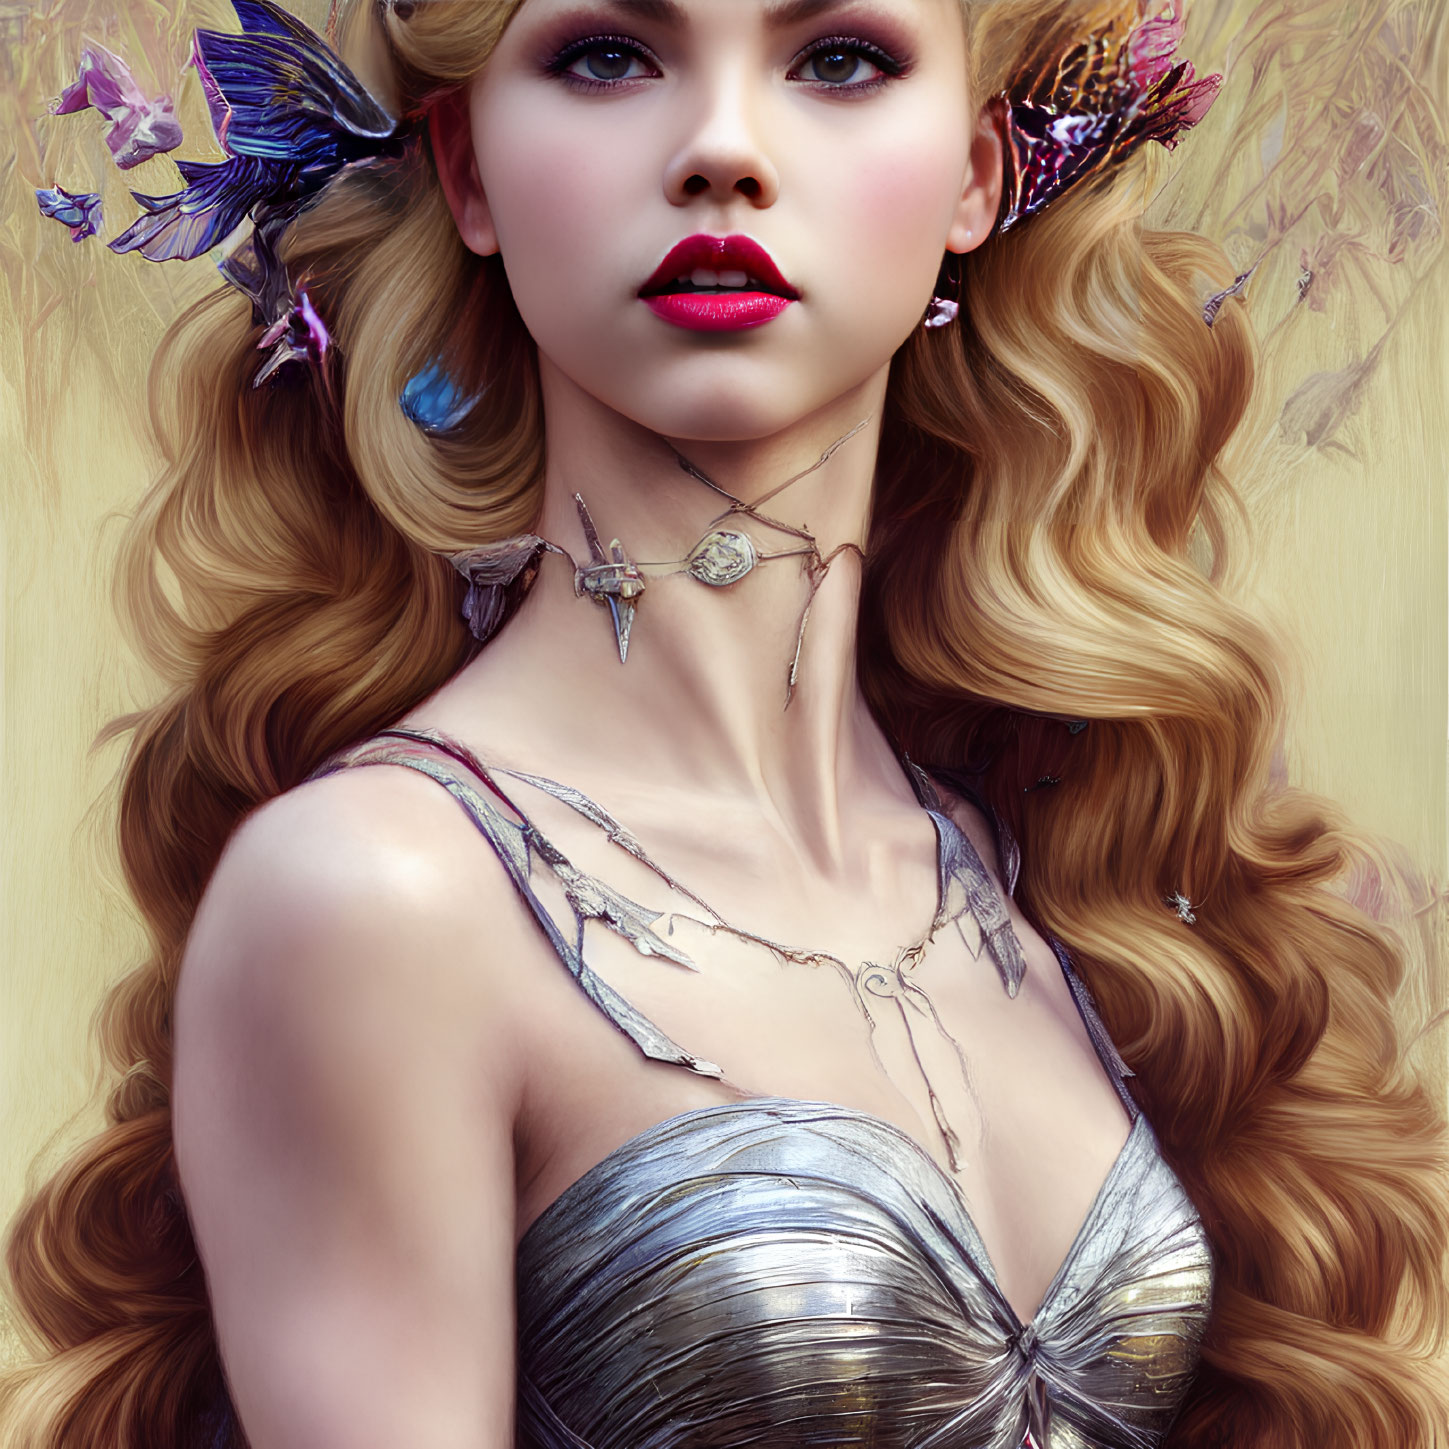 Digital Artwork: Woman with Golden Hair, Butterflies, Silver Dress & Fantasy Jewelry